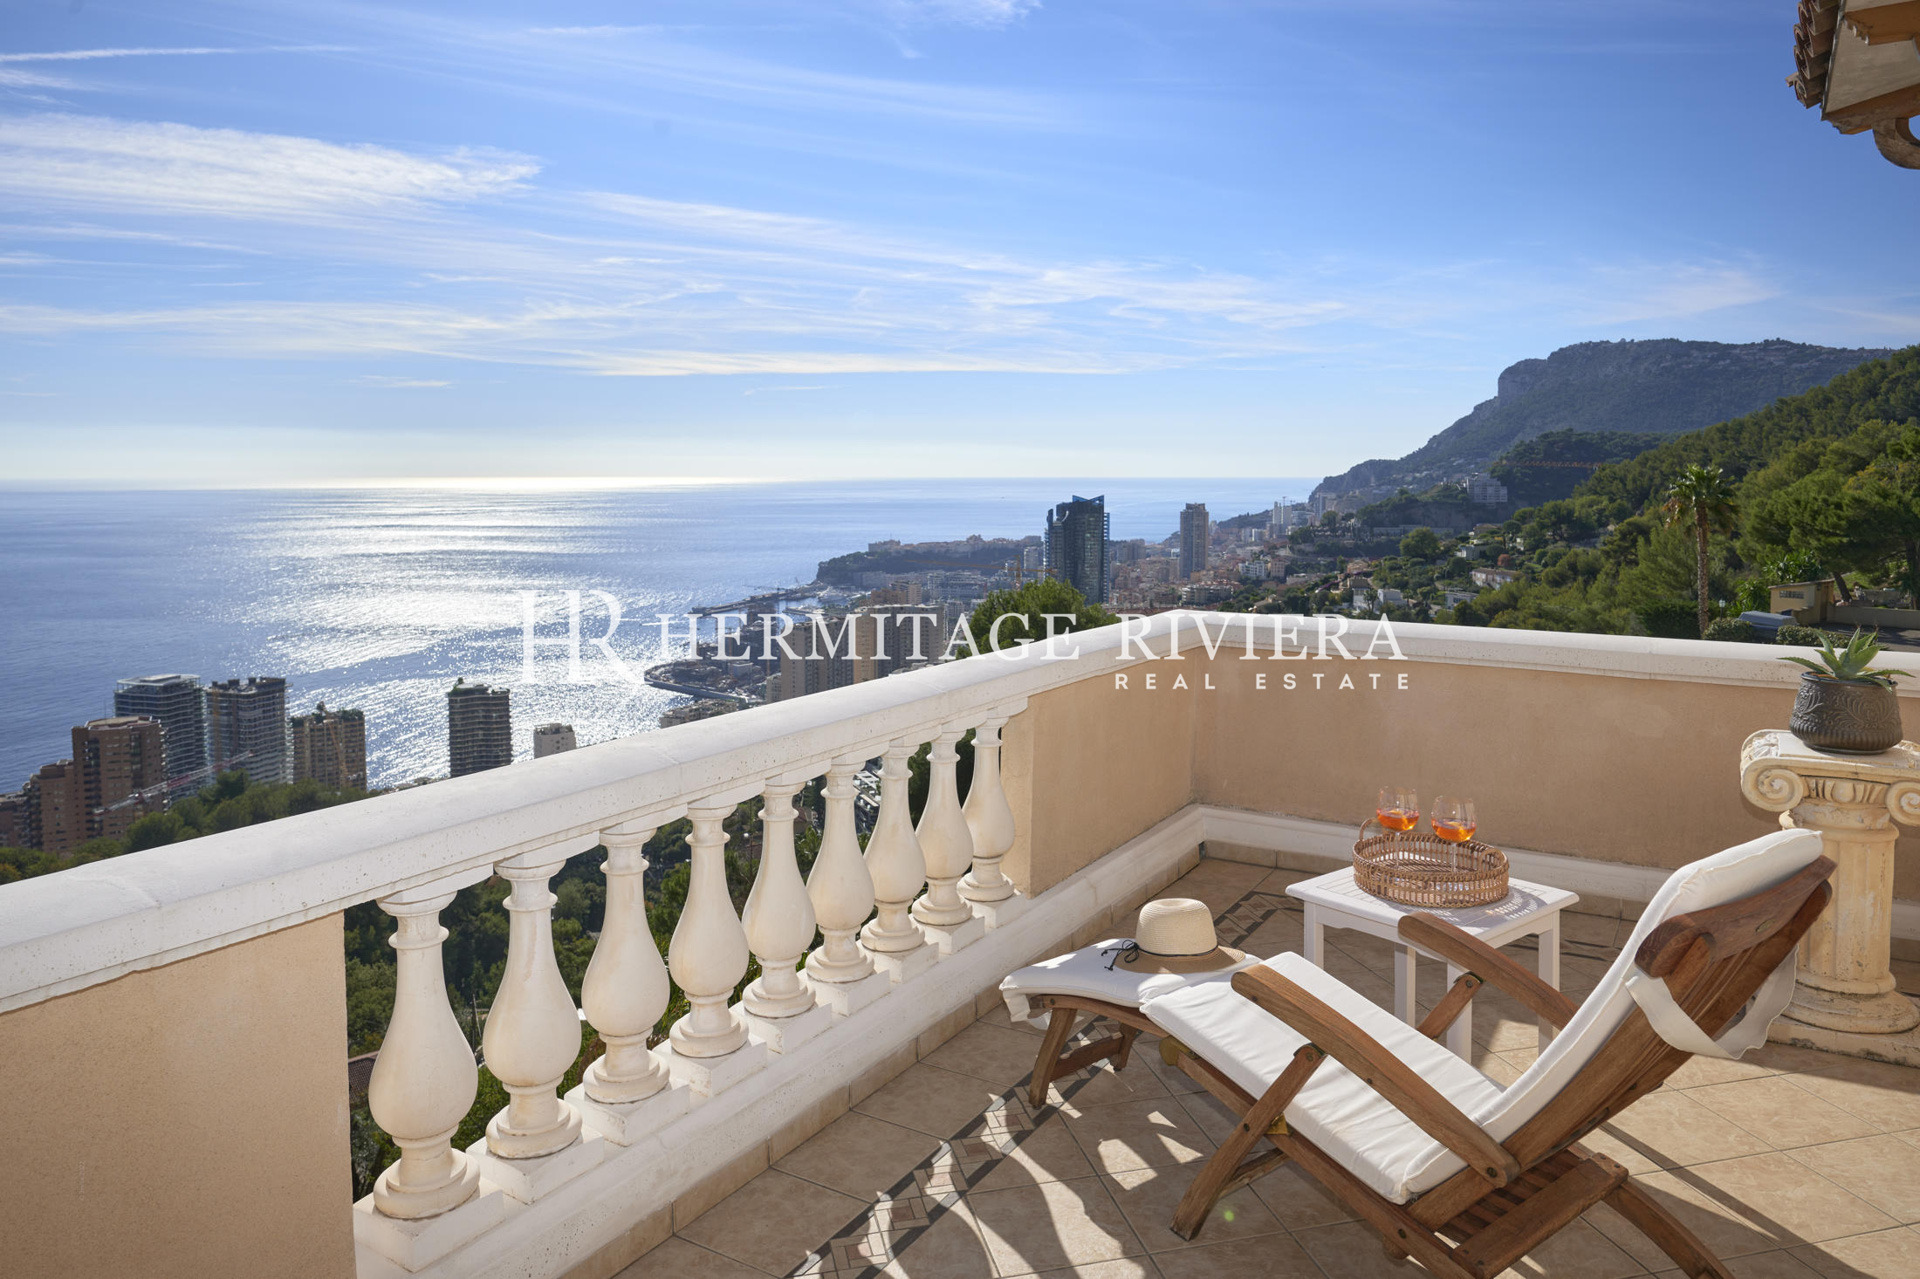 Villa with stunning views of Monaco (image 1)